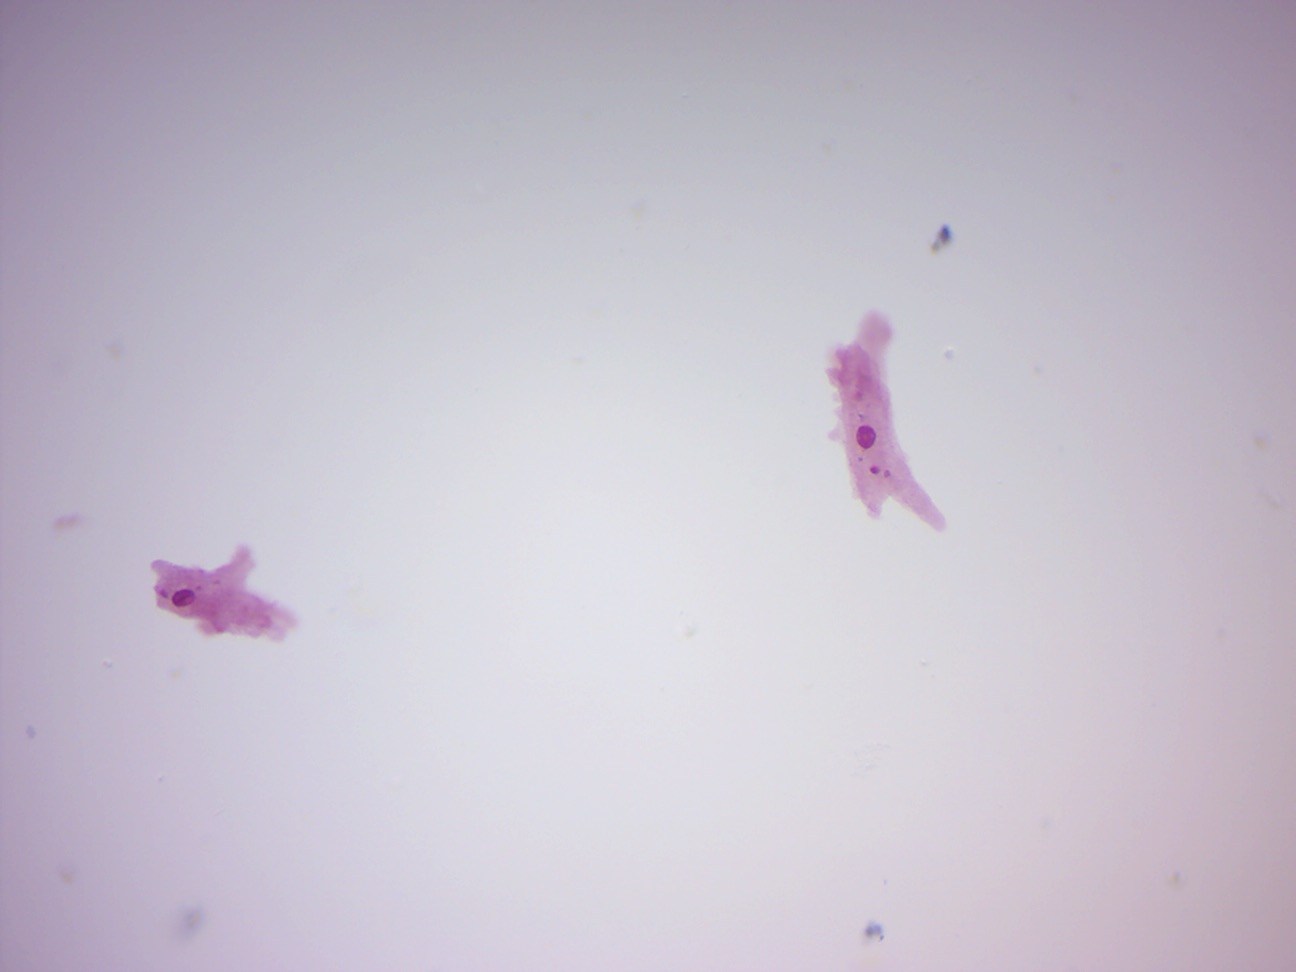 amoeba microscope slide